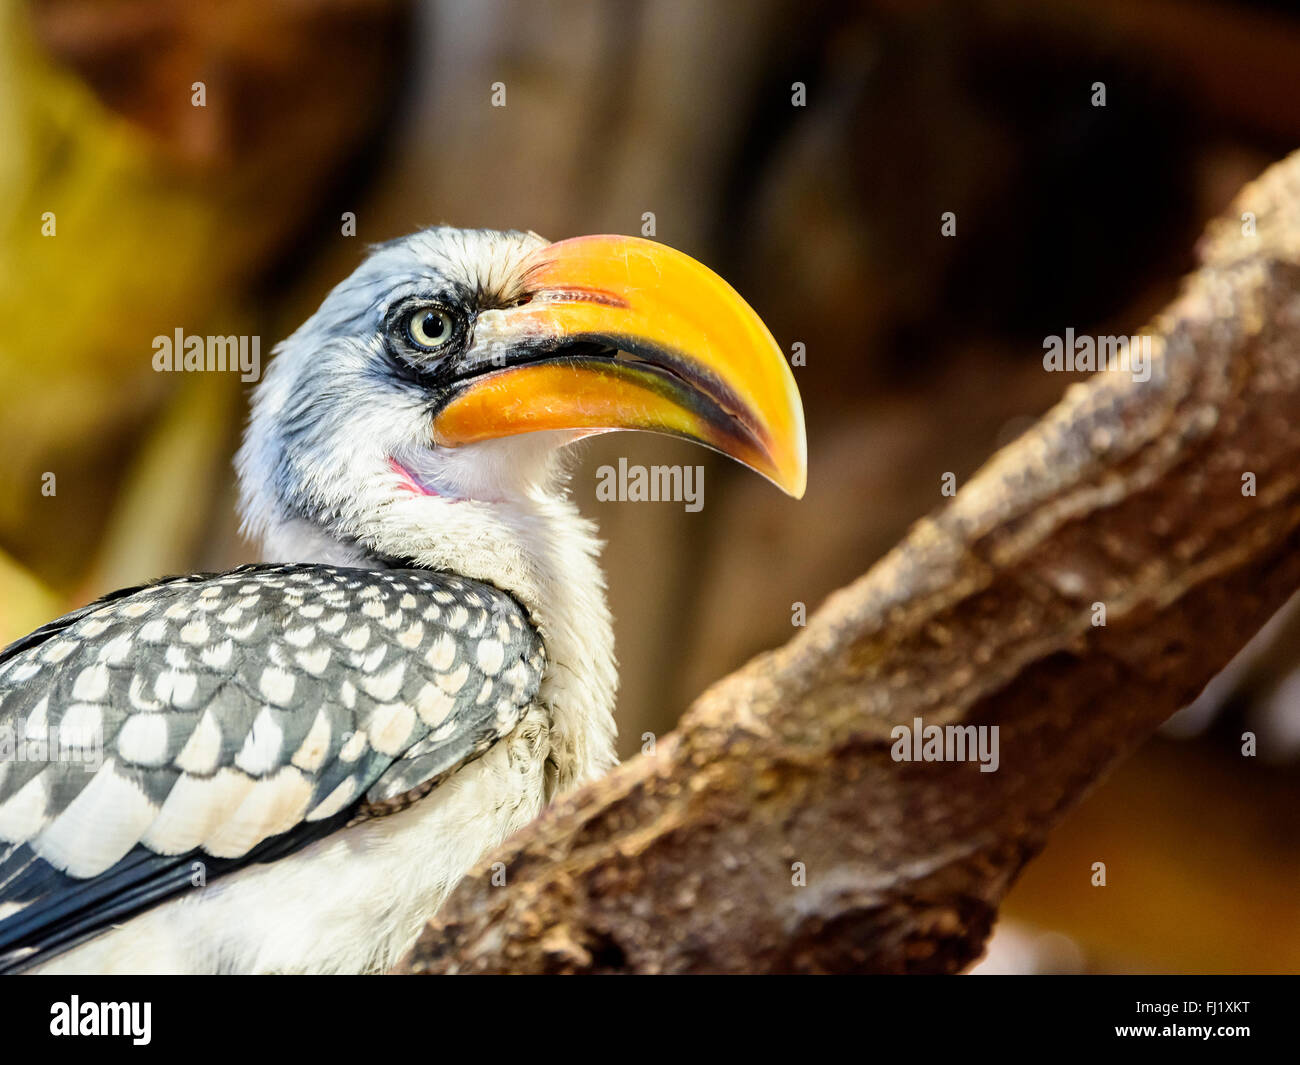 Exotic Jungle Bird With Yellow Beak On Branch Stock Photo